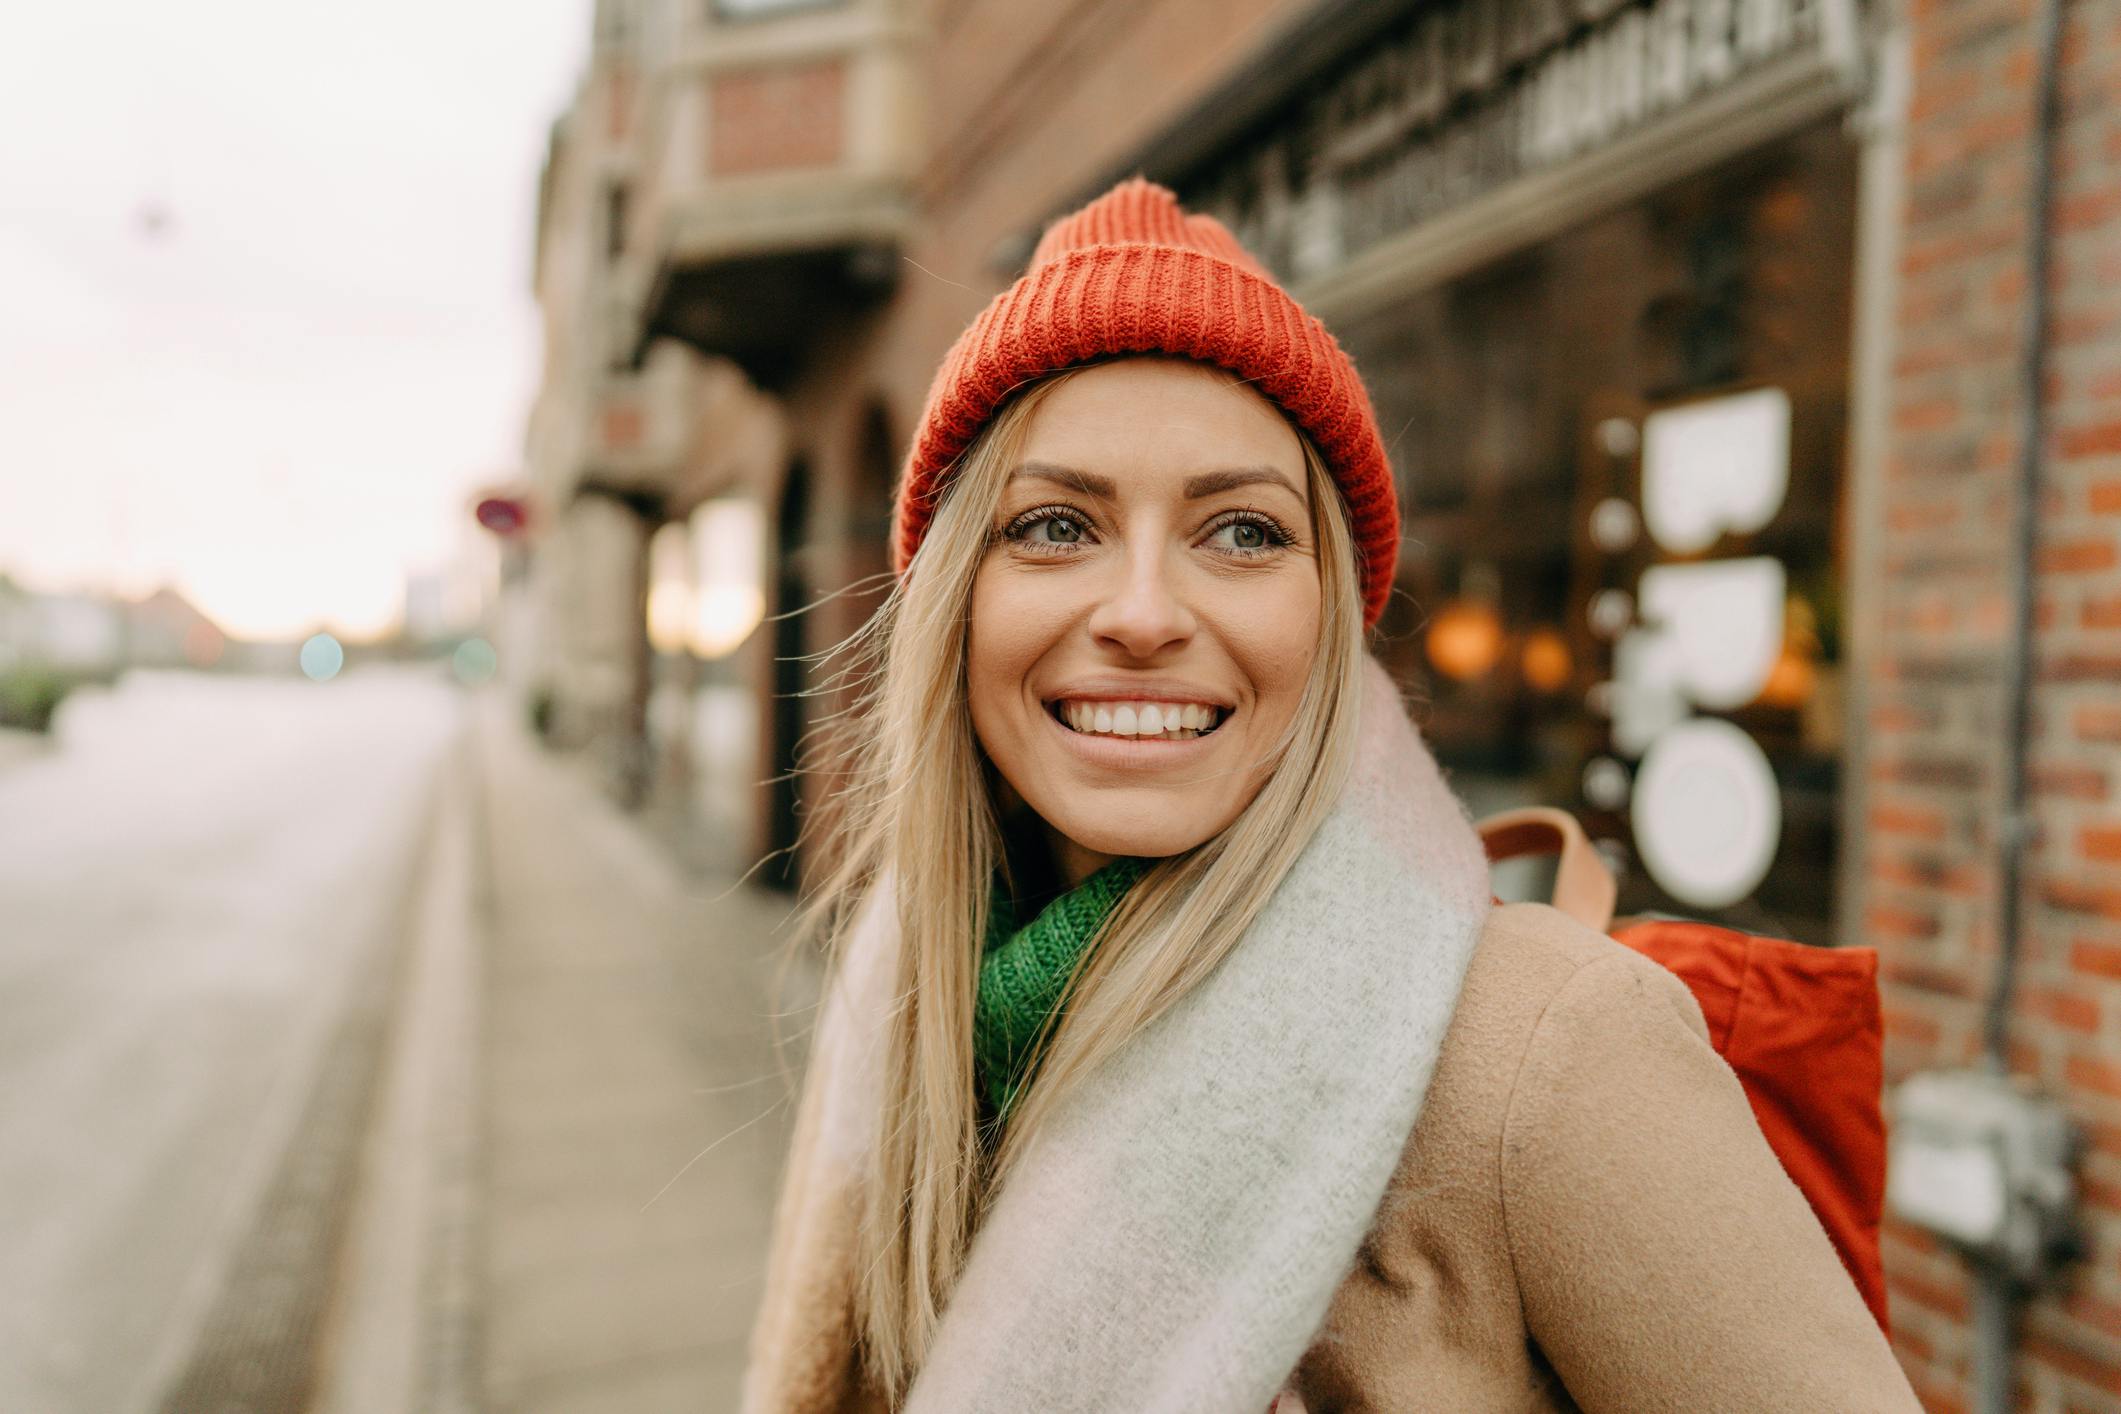 Blond woman in winter attire